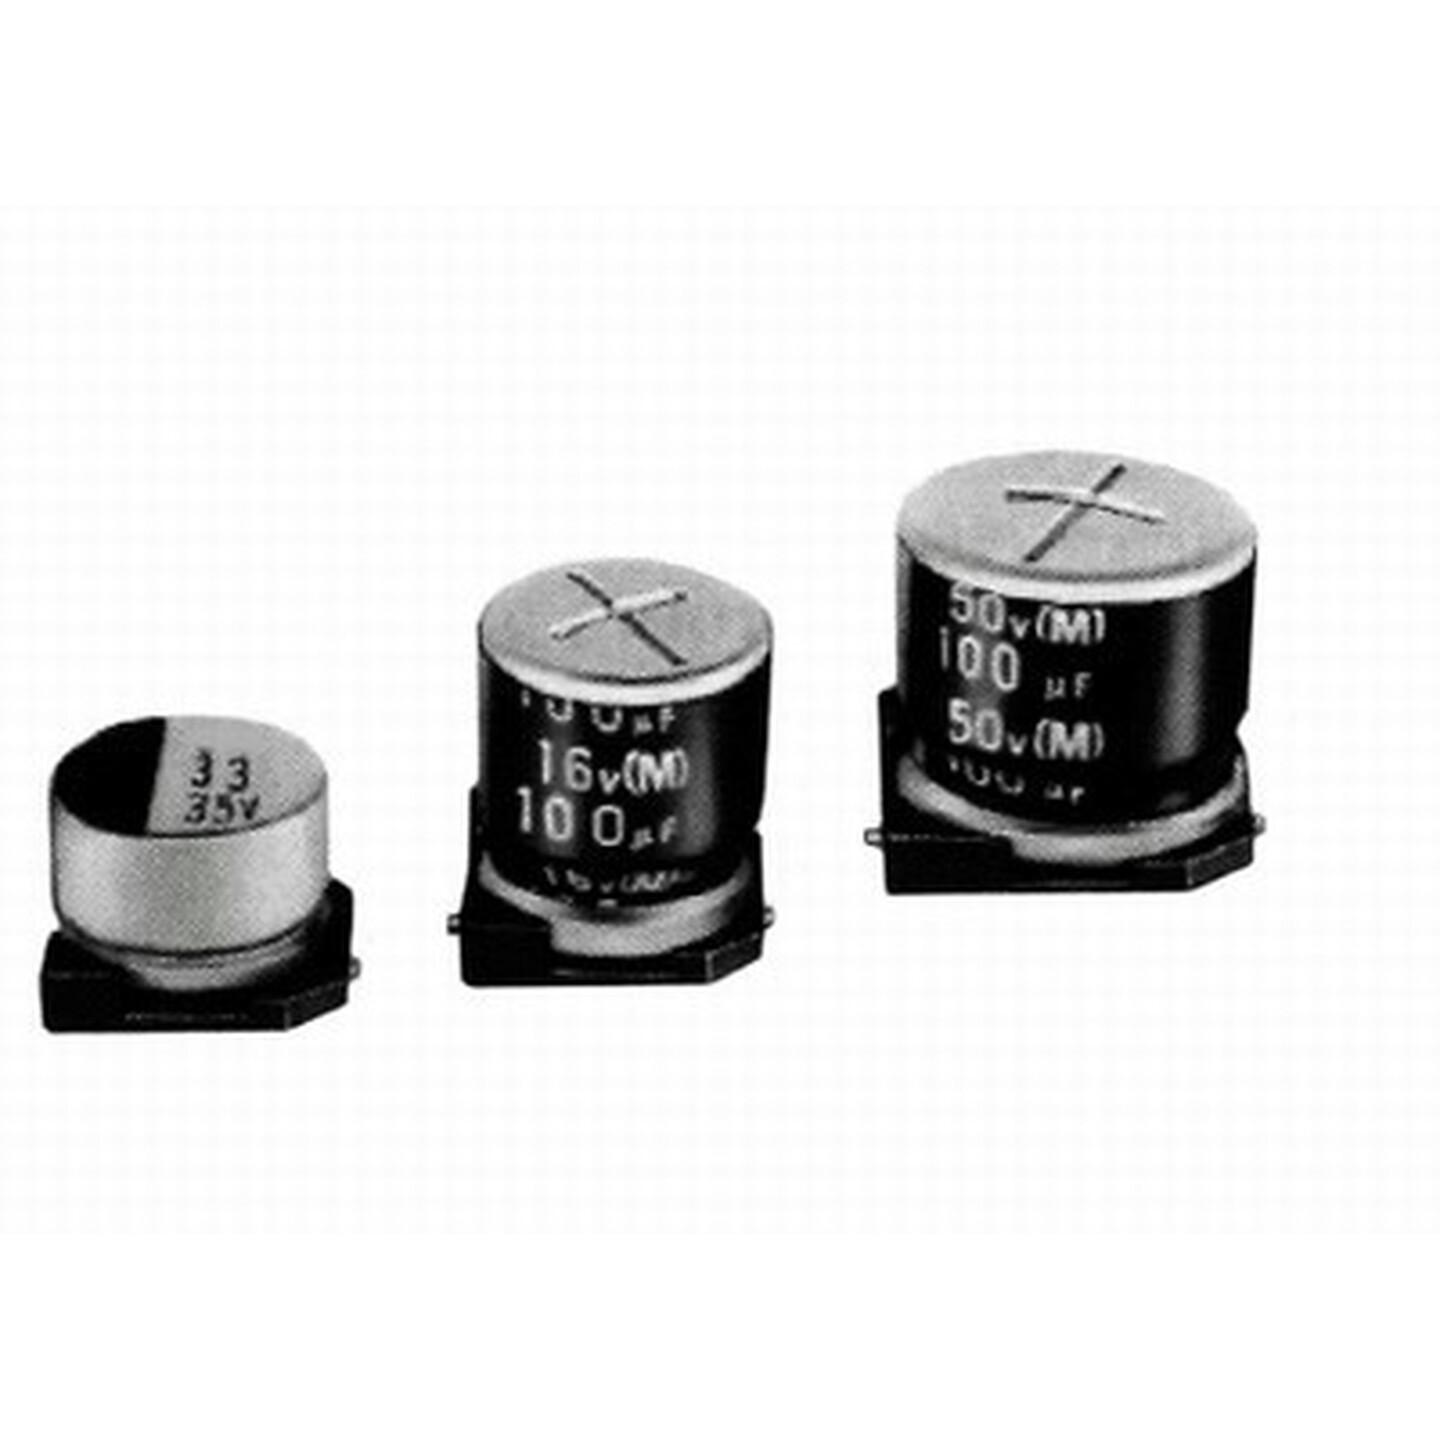 SMD Capacitor Electrolytic 100uF 25V - Pack 10